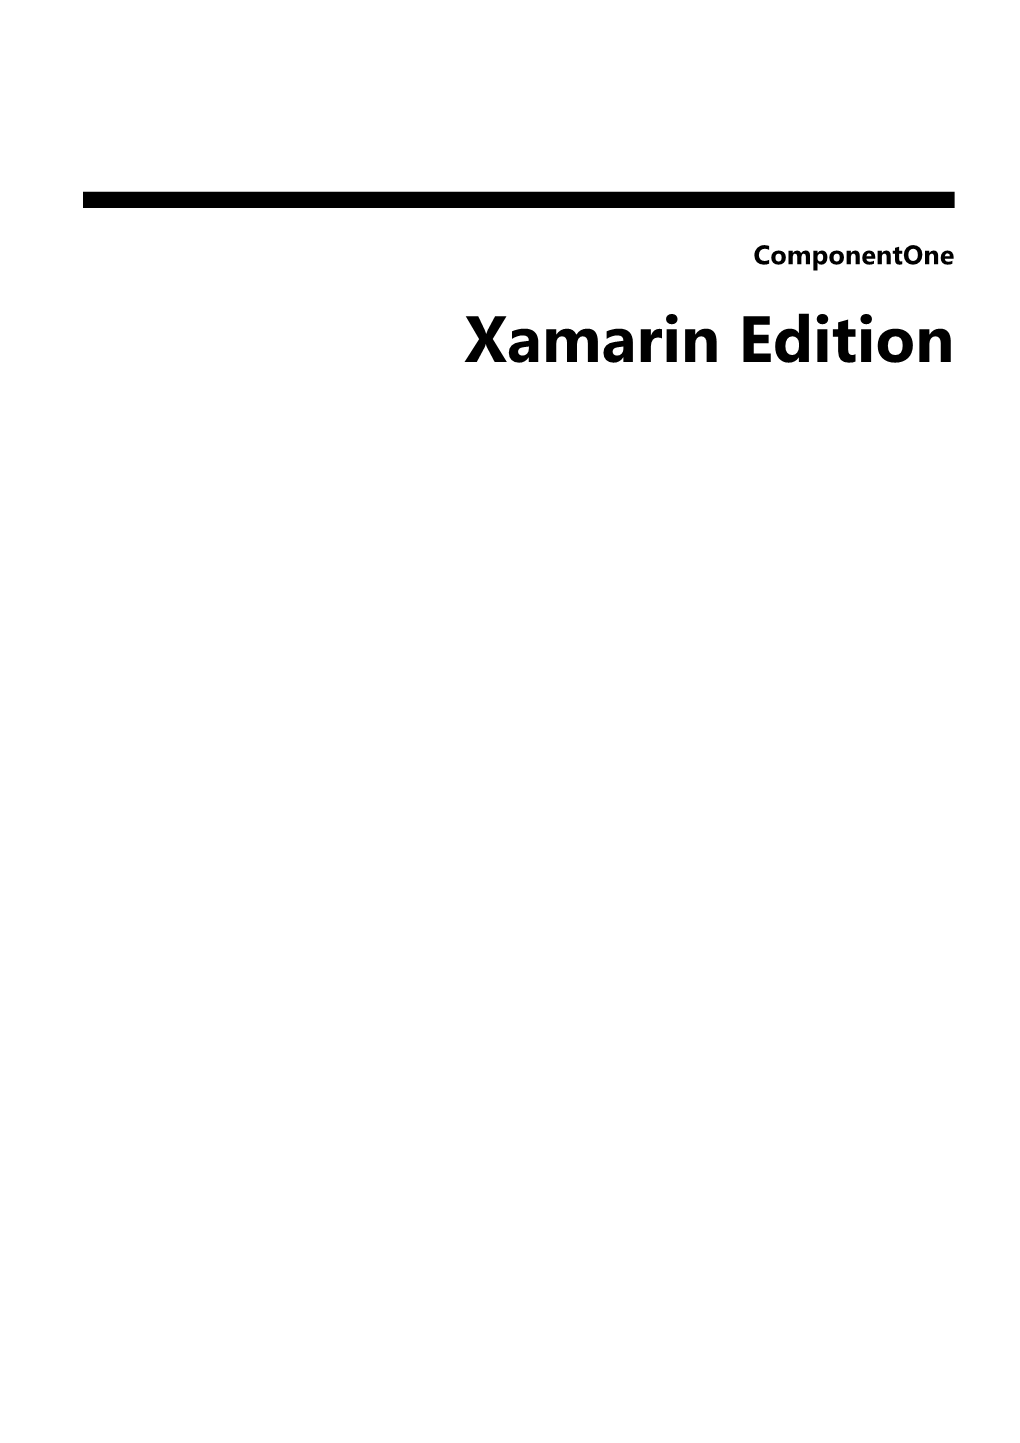 Xamarin Edition Xamarin Edition 1